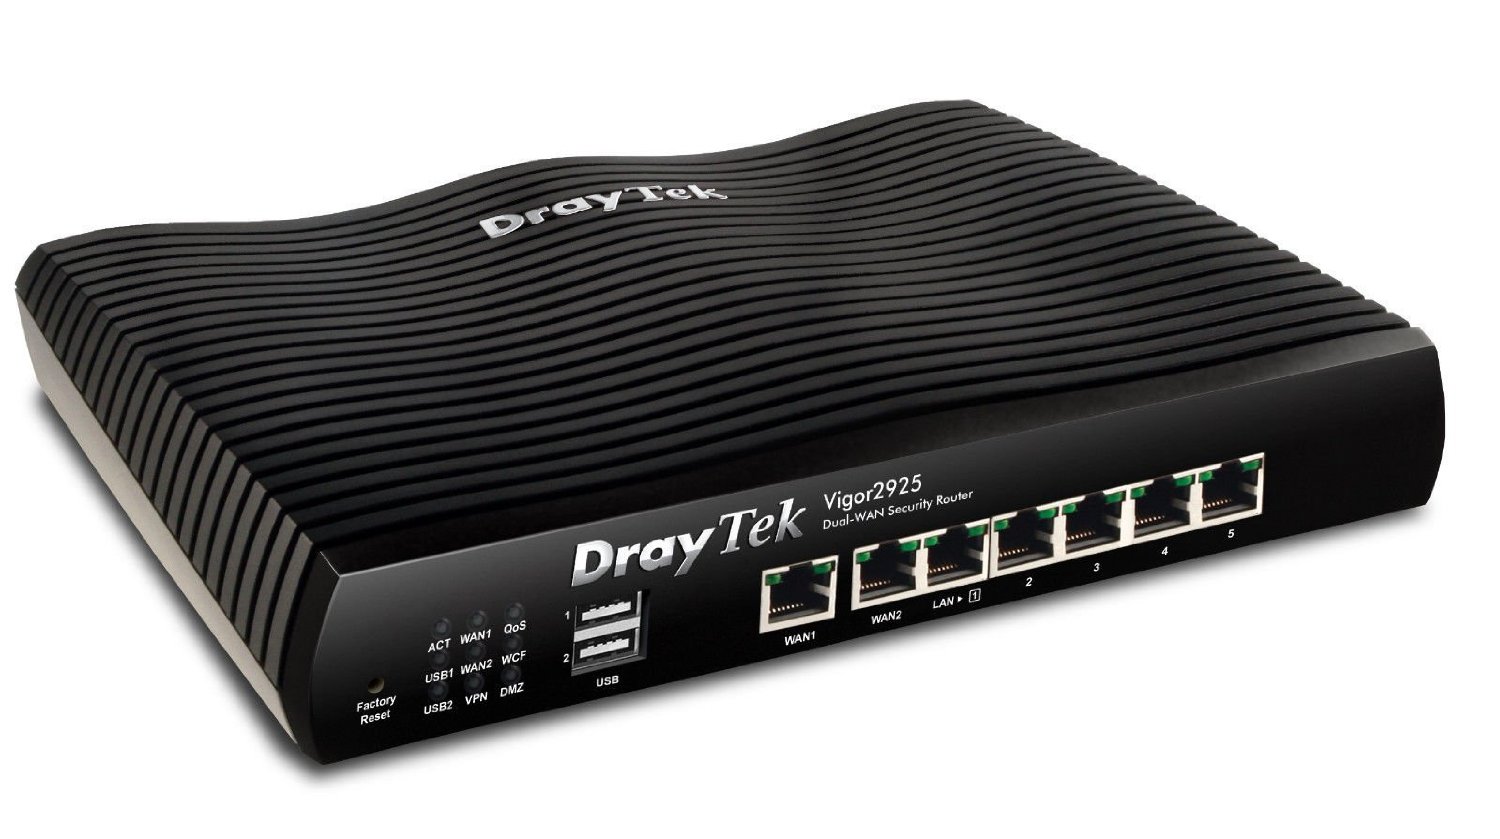 DrayTek Vigor2925 (Vigor 2925)Dual Gigabit WAN Router with 50 x VPN tunnel